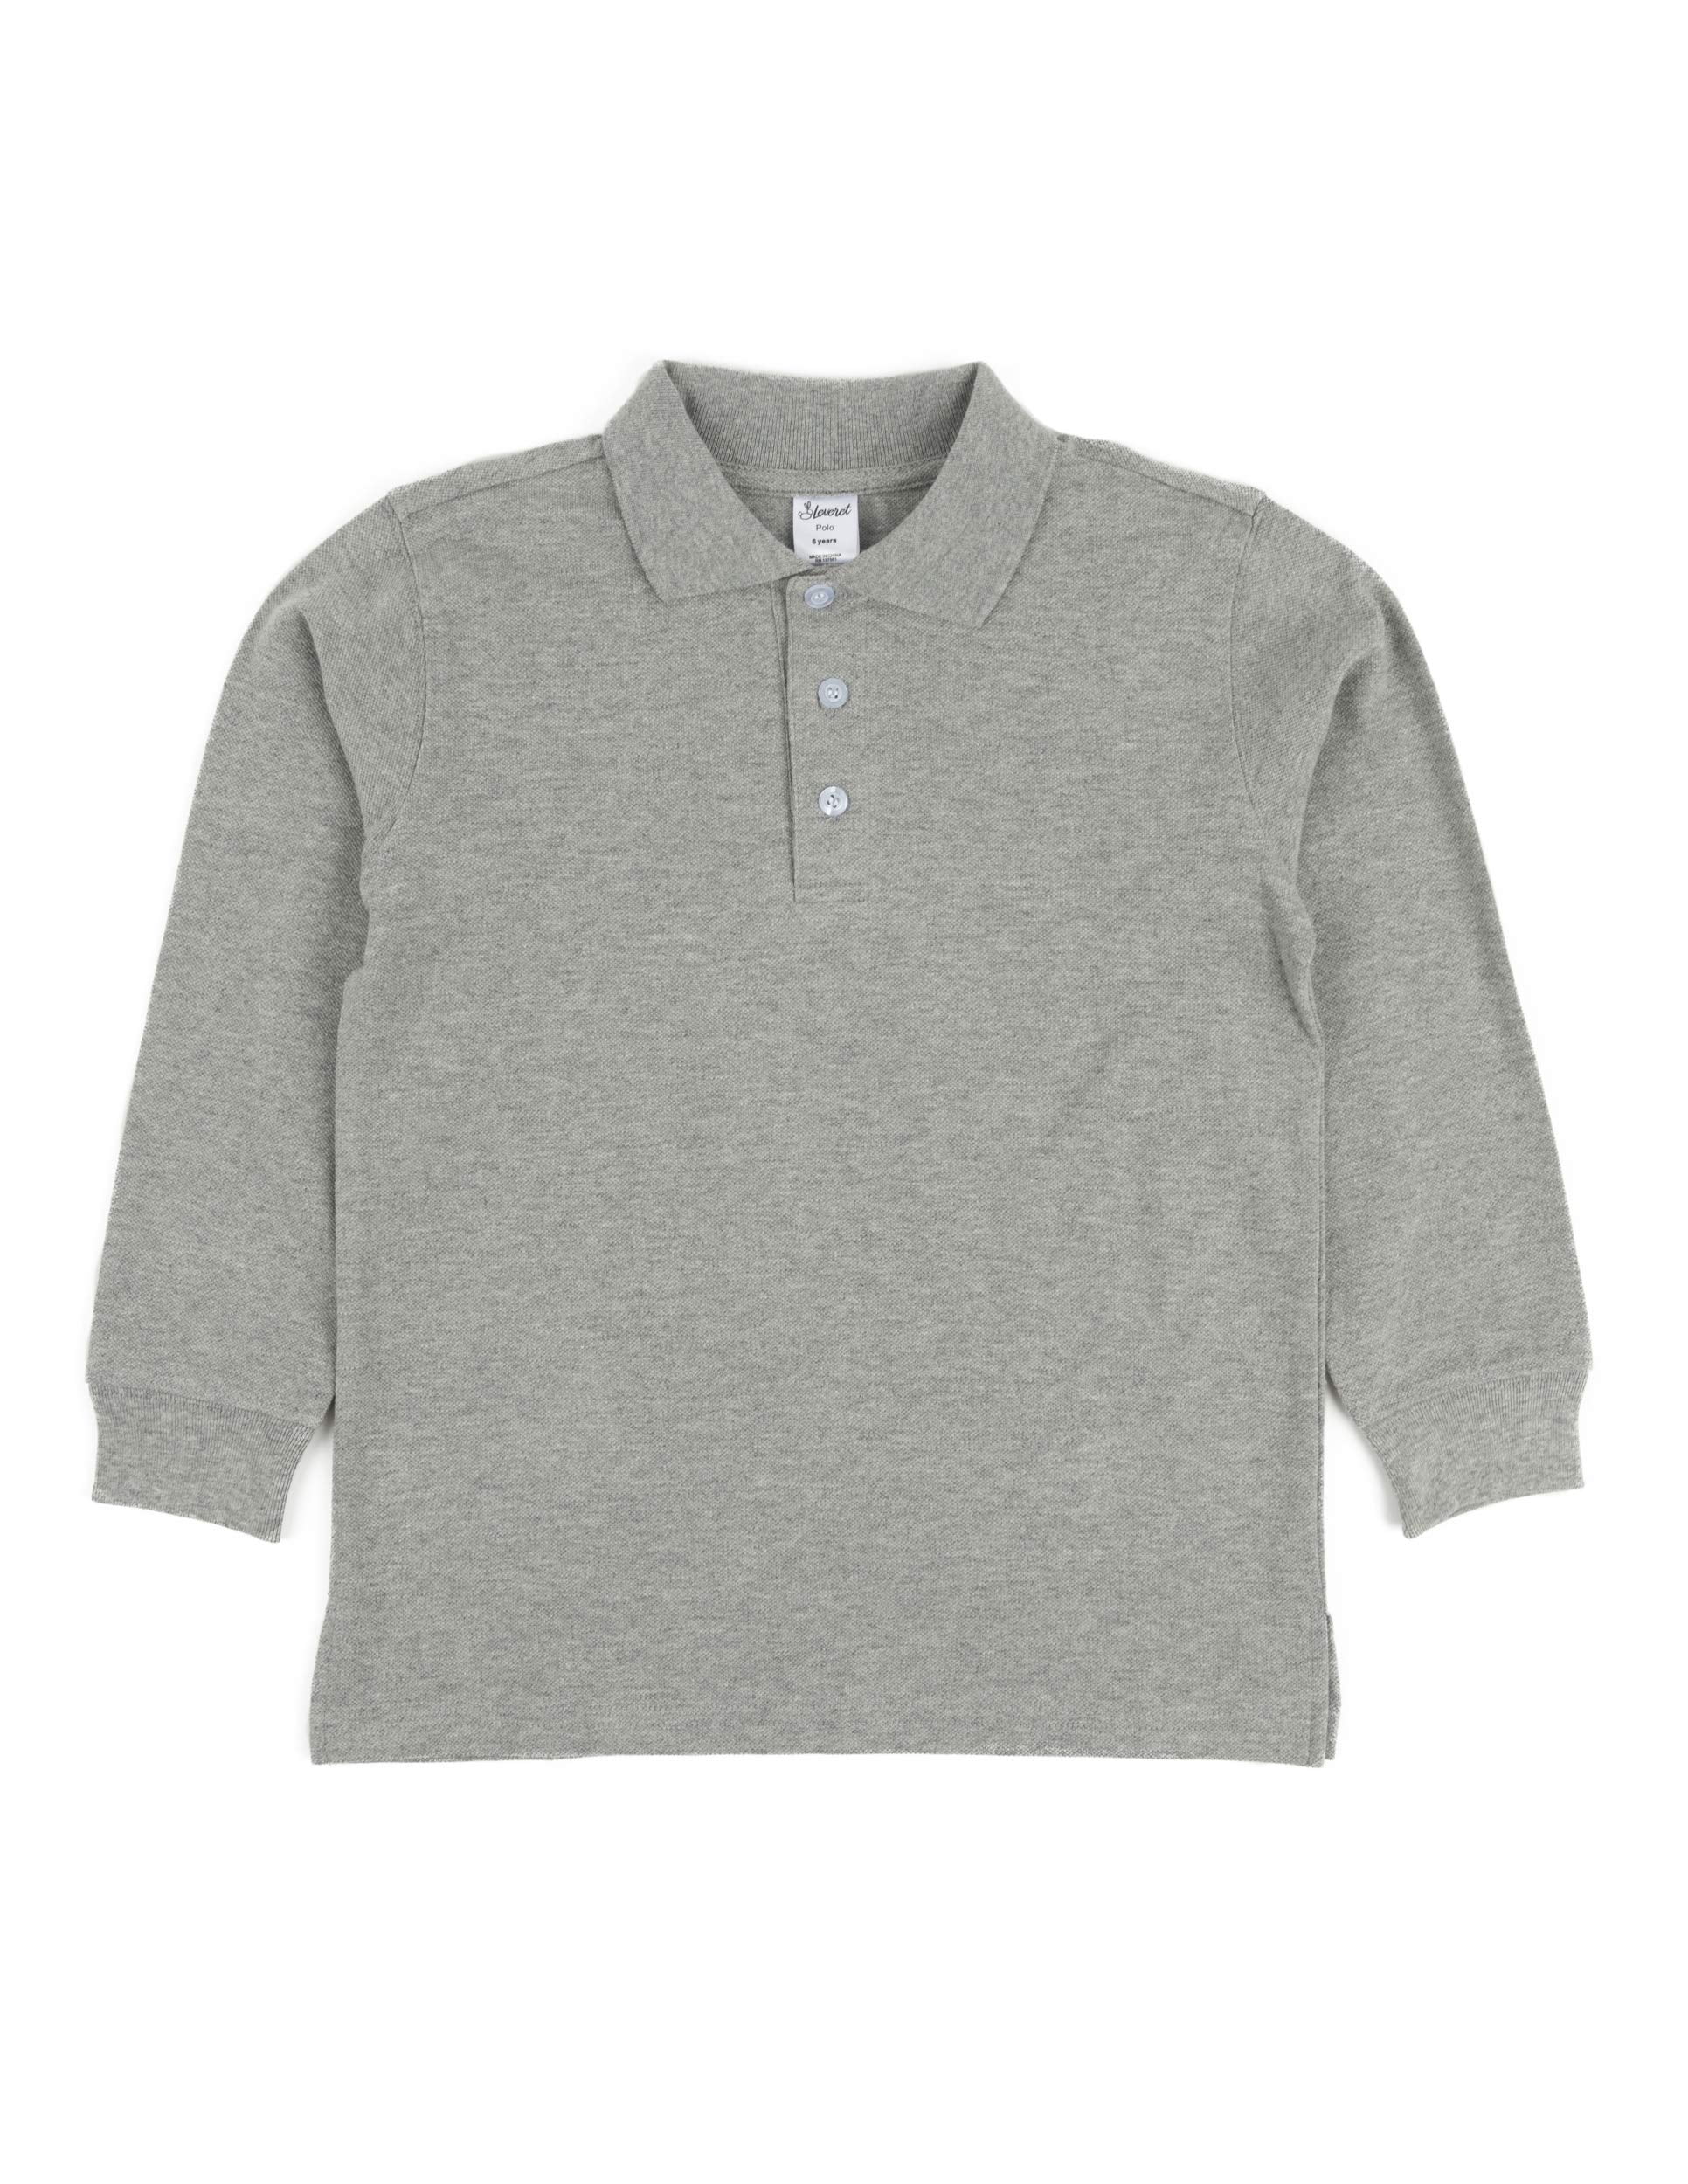 Leveret Kids & Toddler Boys Girls Long Sleeve 100% Cotton Polo Shirt ...